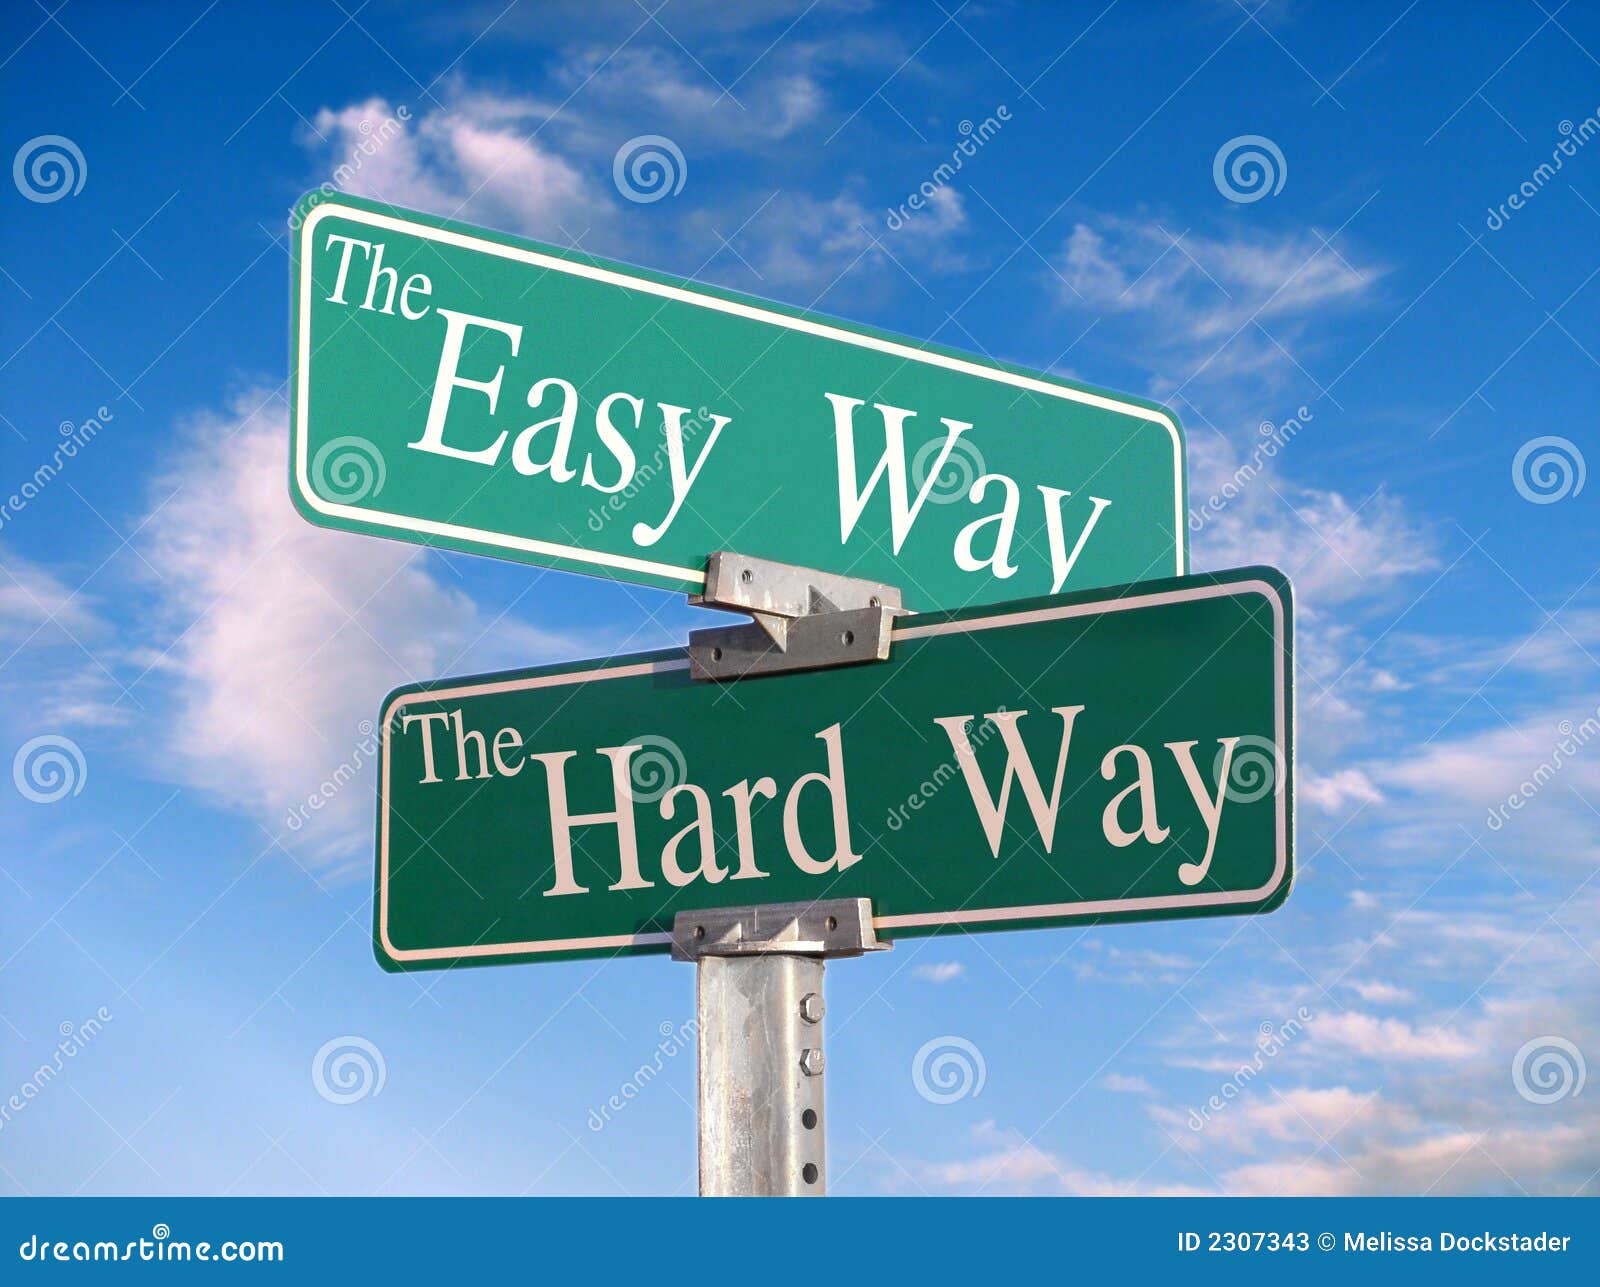 the easy way, or hard way